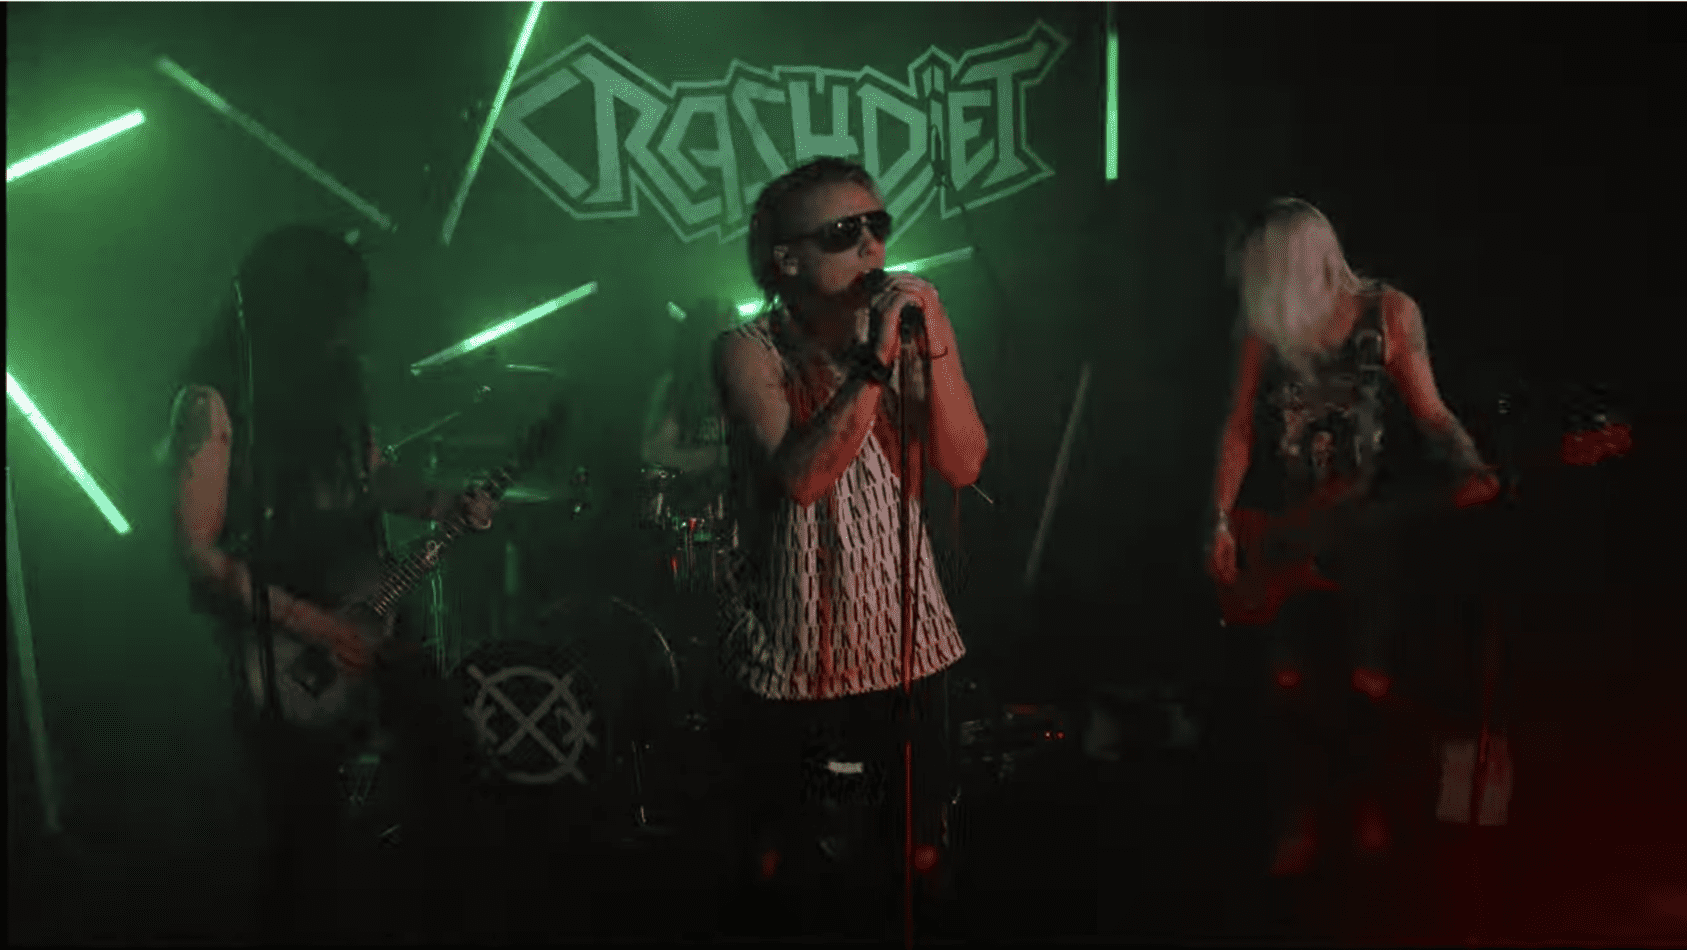 CRASHDIET - Quarantine Thrills Live! (Online Concert Review)